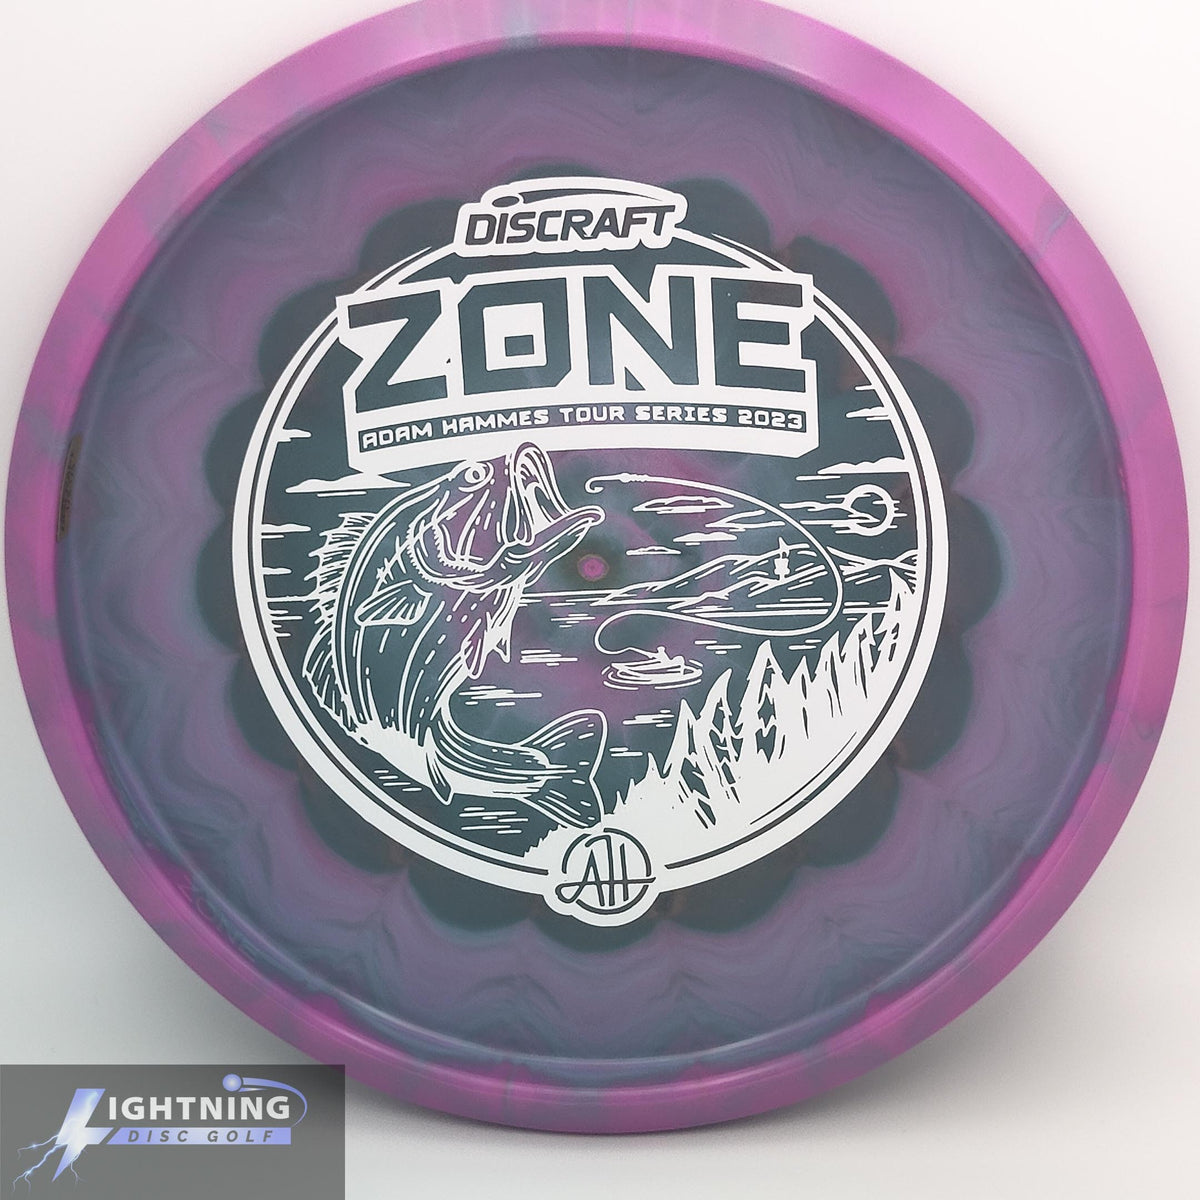 Discraft Zone - Adam Hammes Tour Series 2023